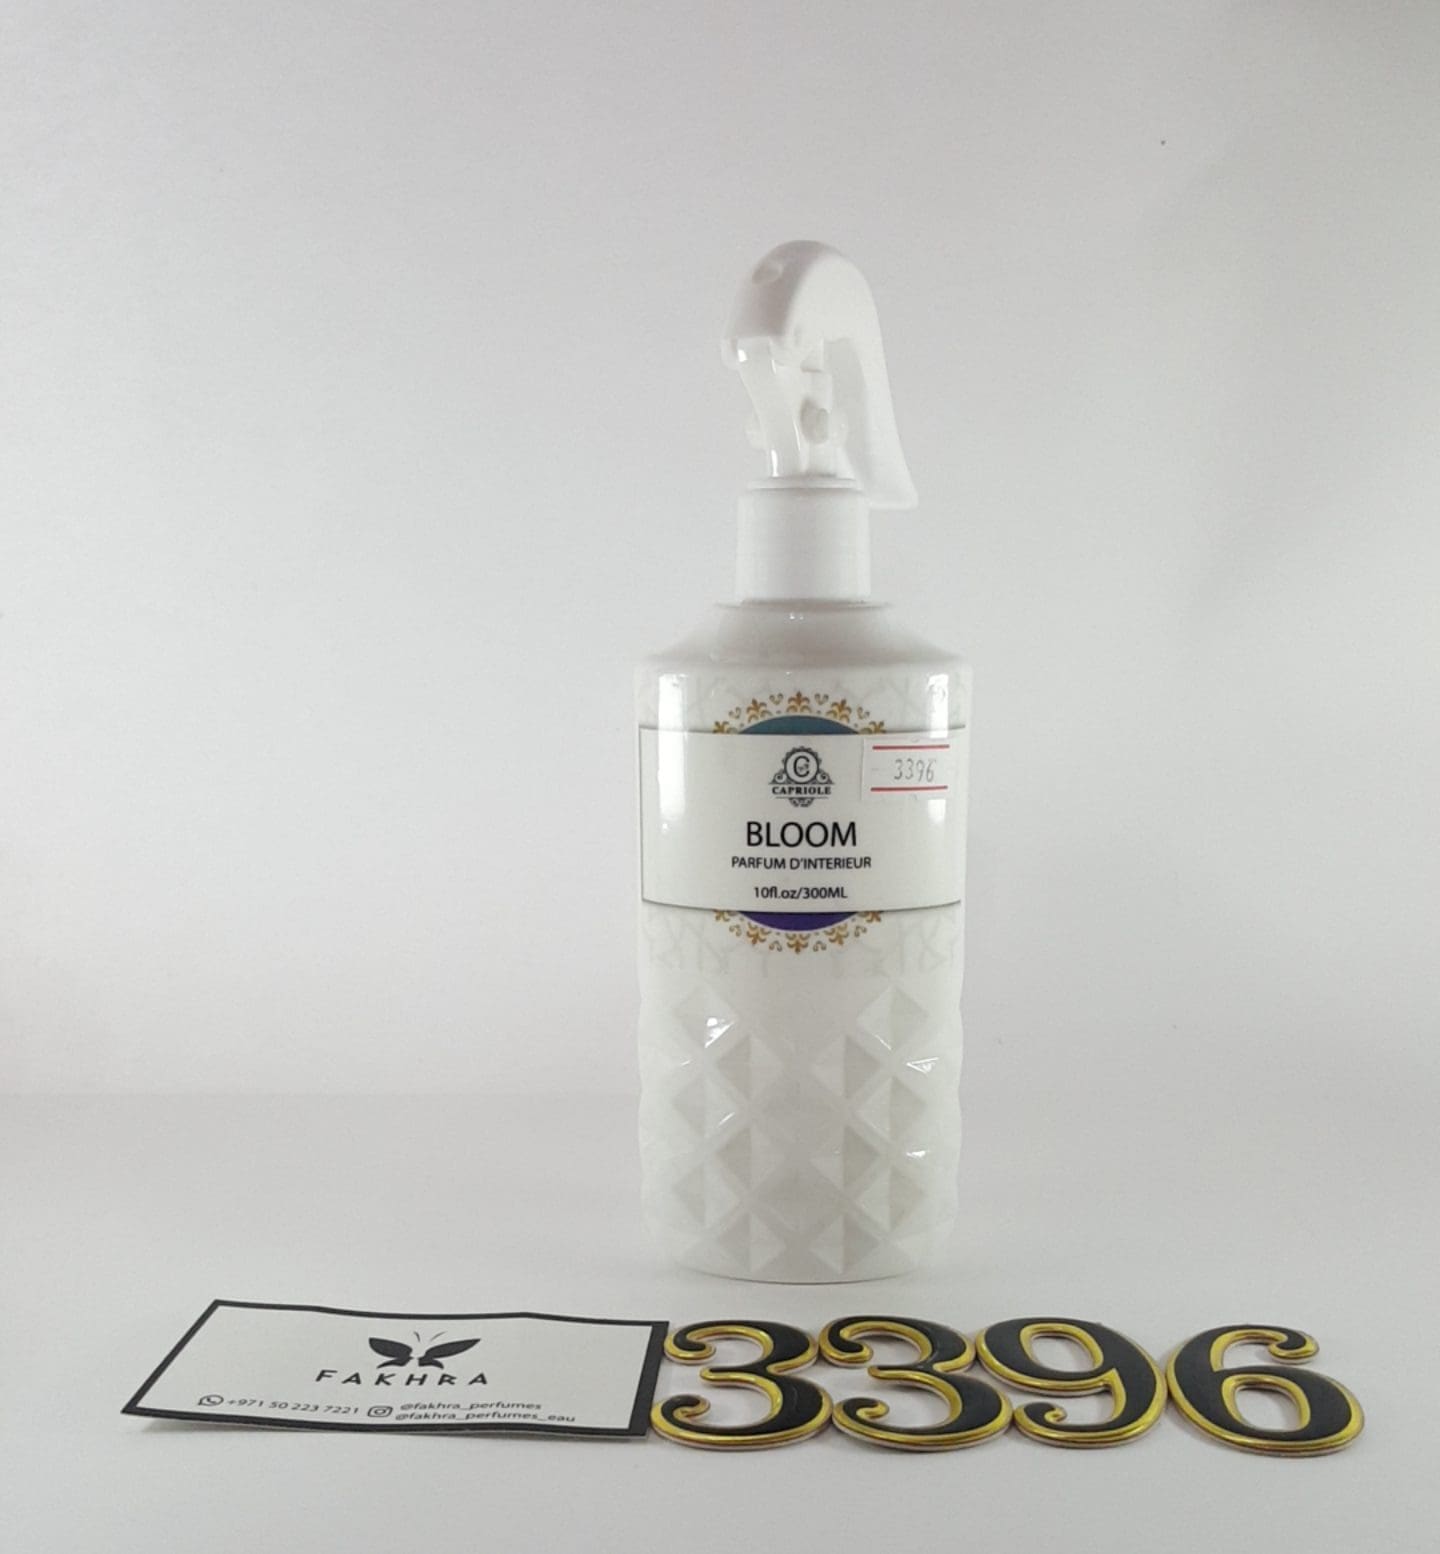 3396 Capriole BLOOM Home perfume 300 ml